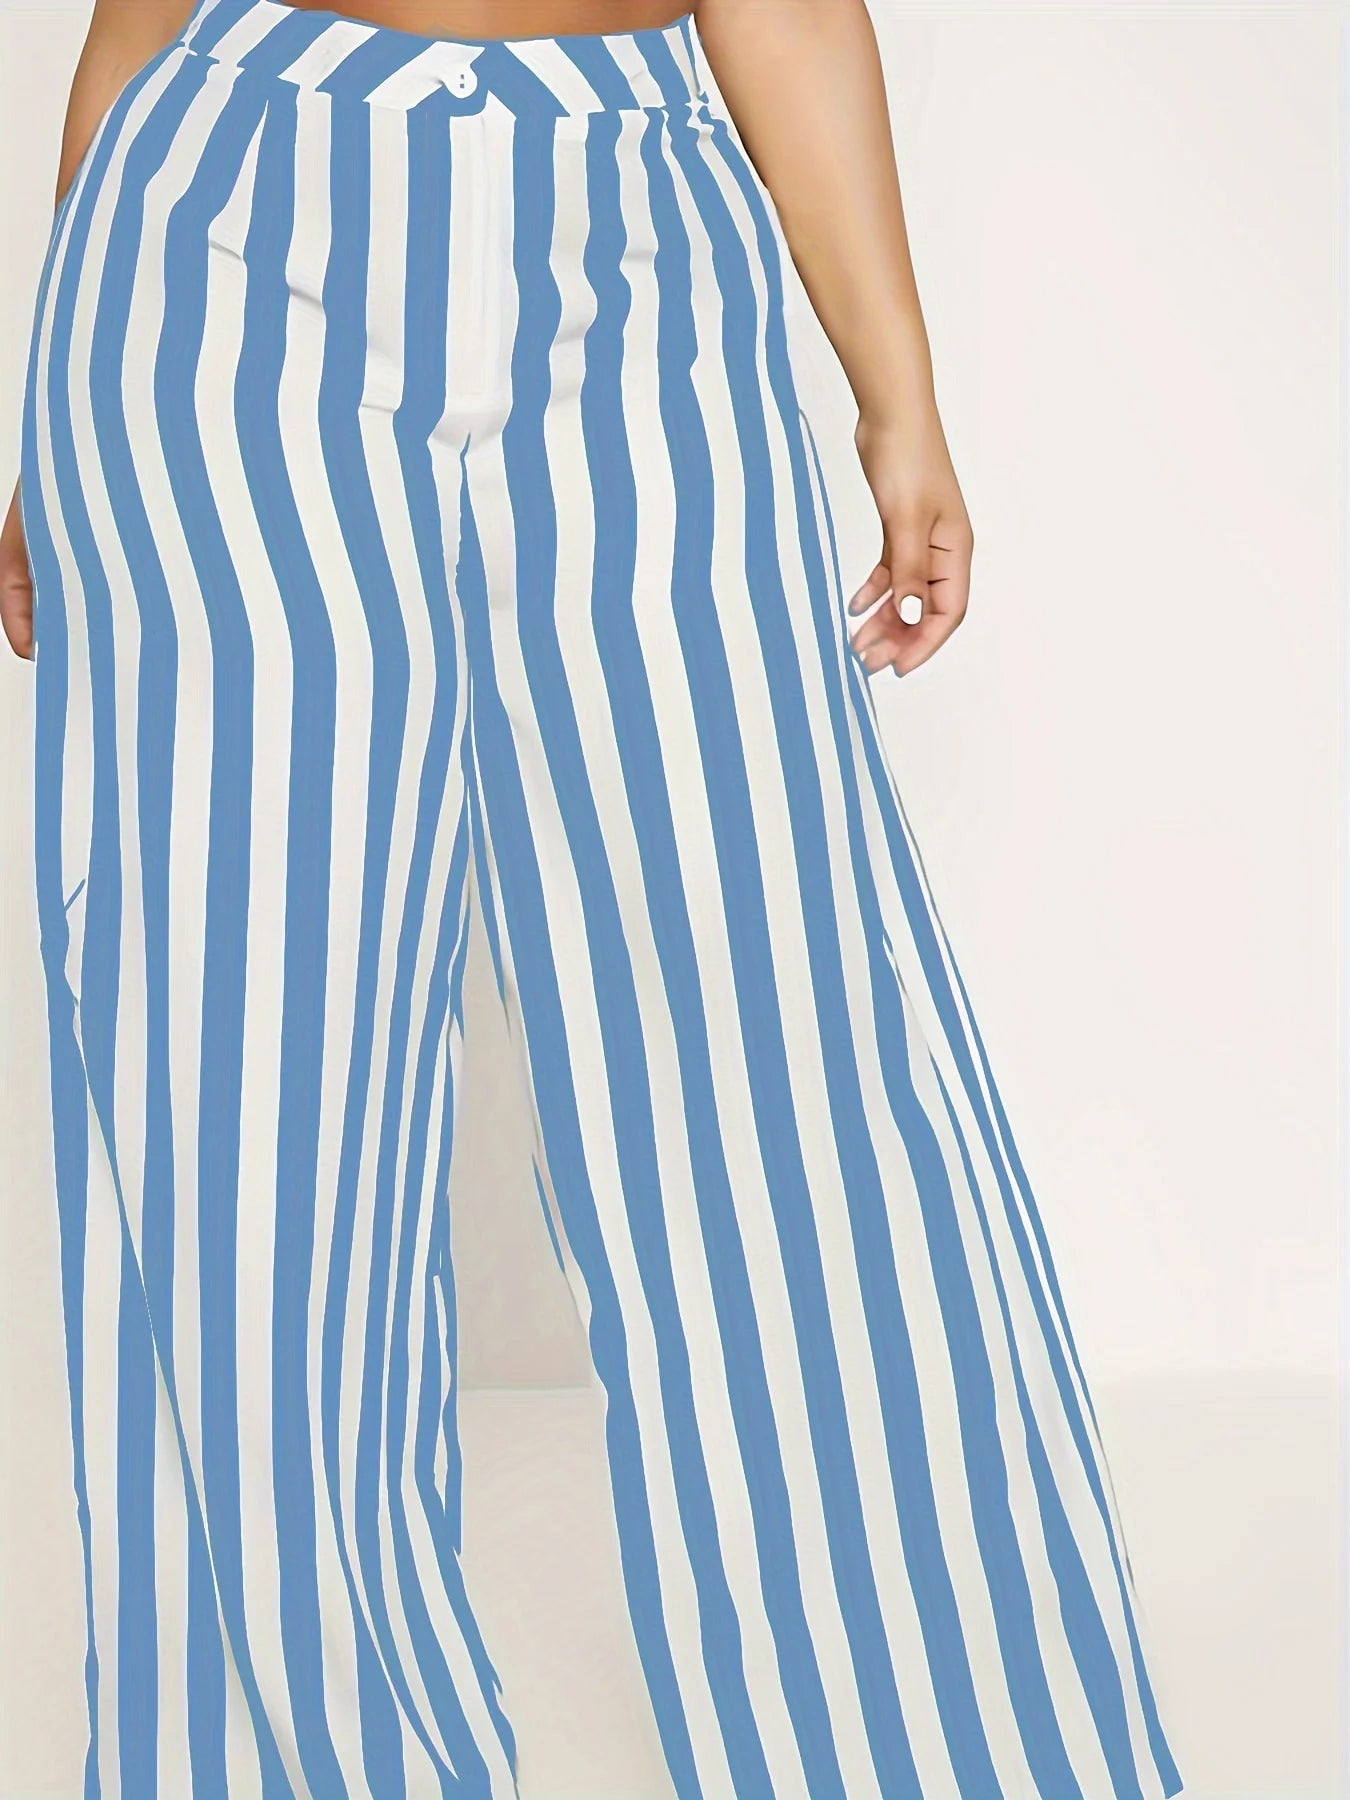 Plus Size Casual Outfits Two Piece Set, Women's Plus Stripe Print Long Sleeve Cardigan & Wide Leg Pants Outfits 2 Piece Set